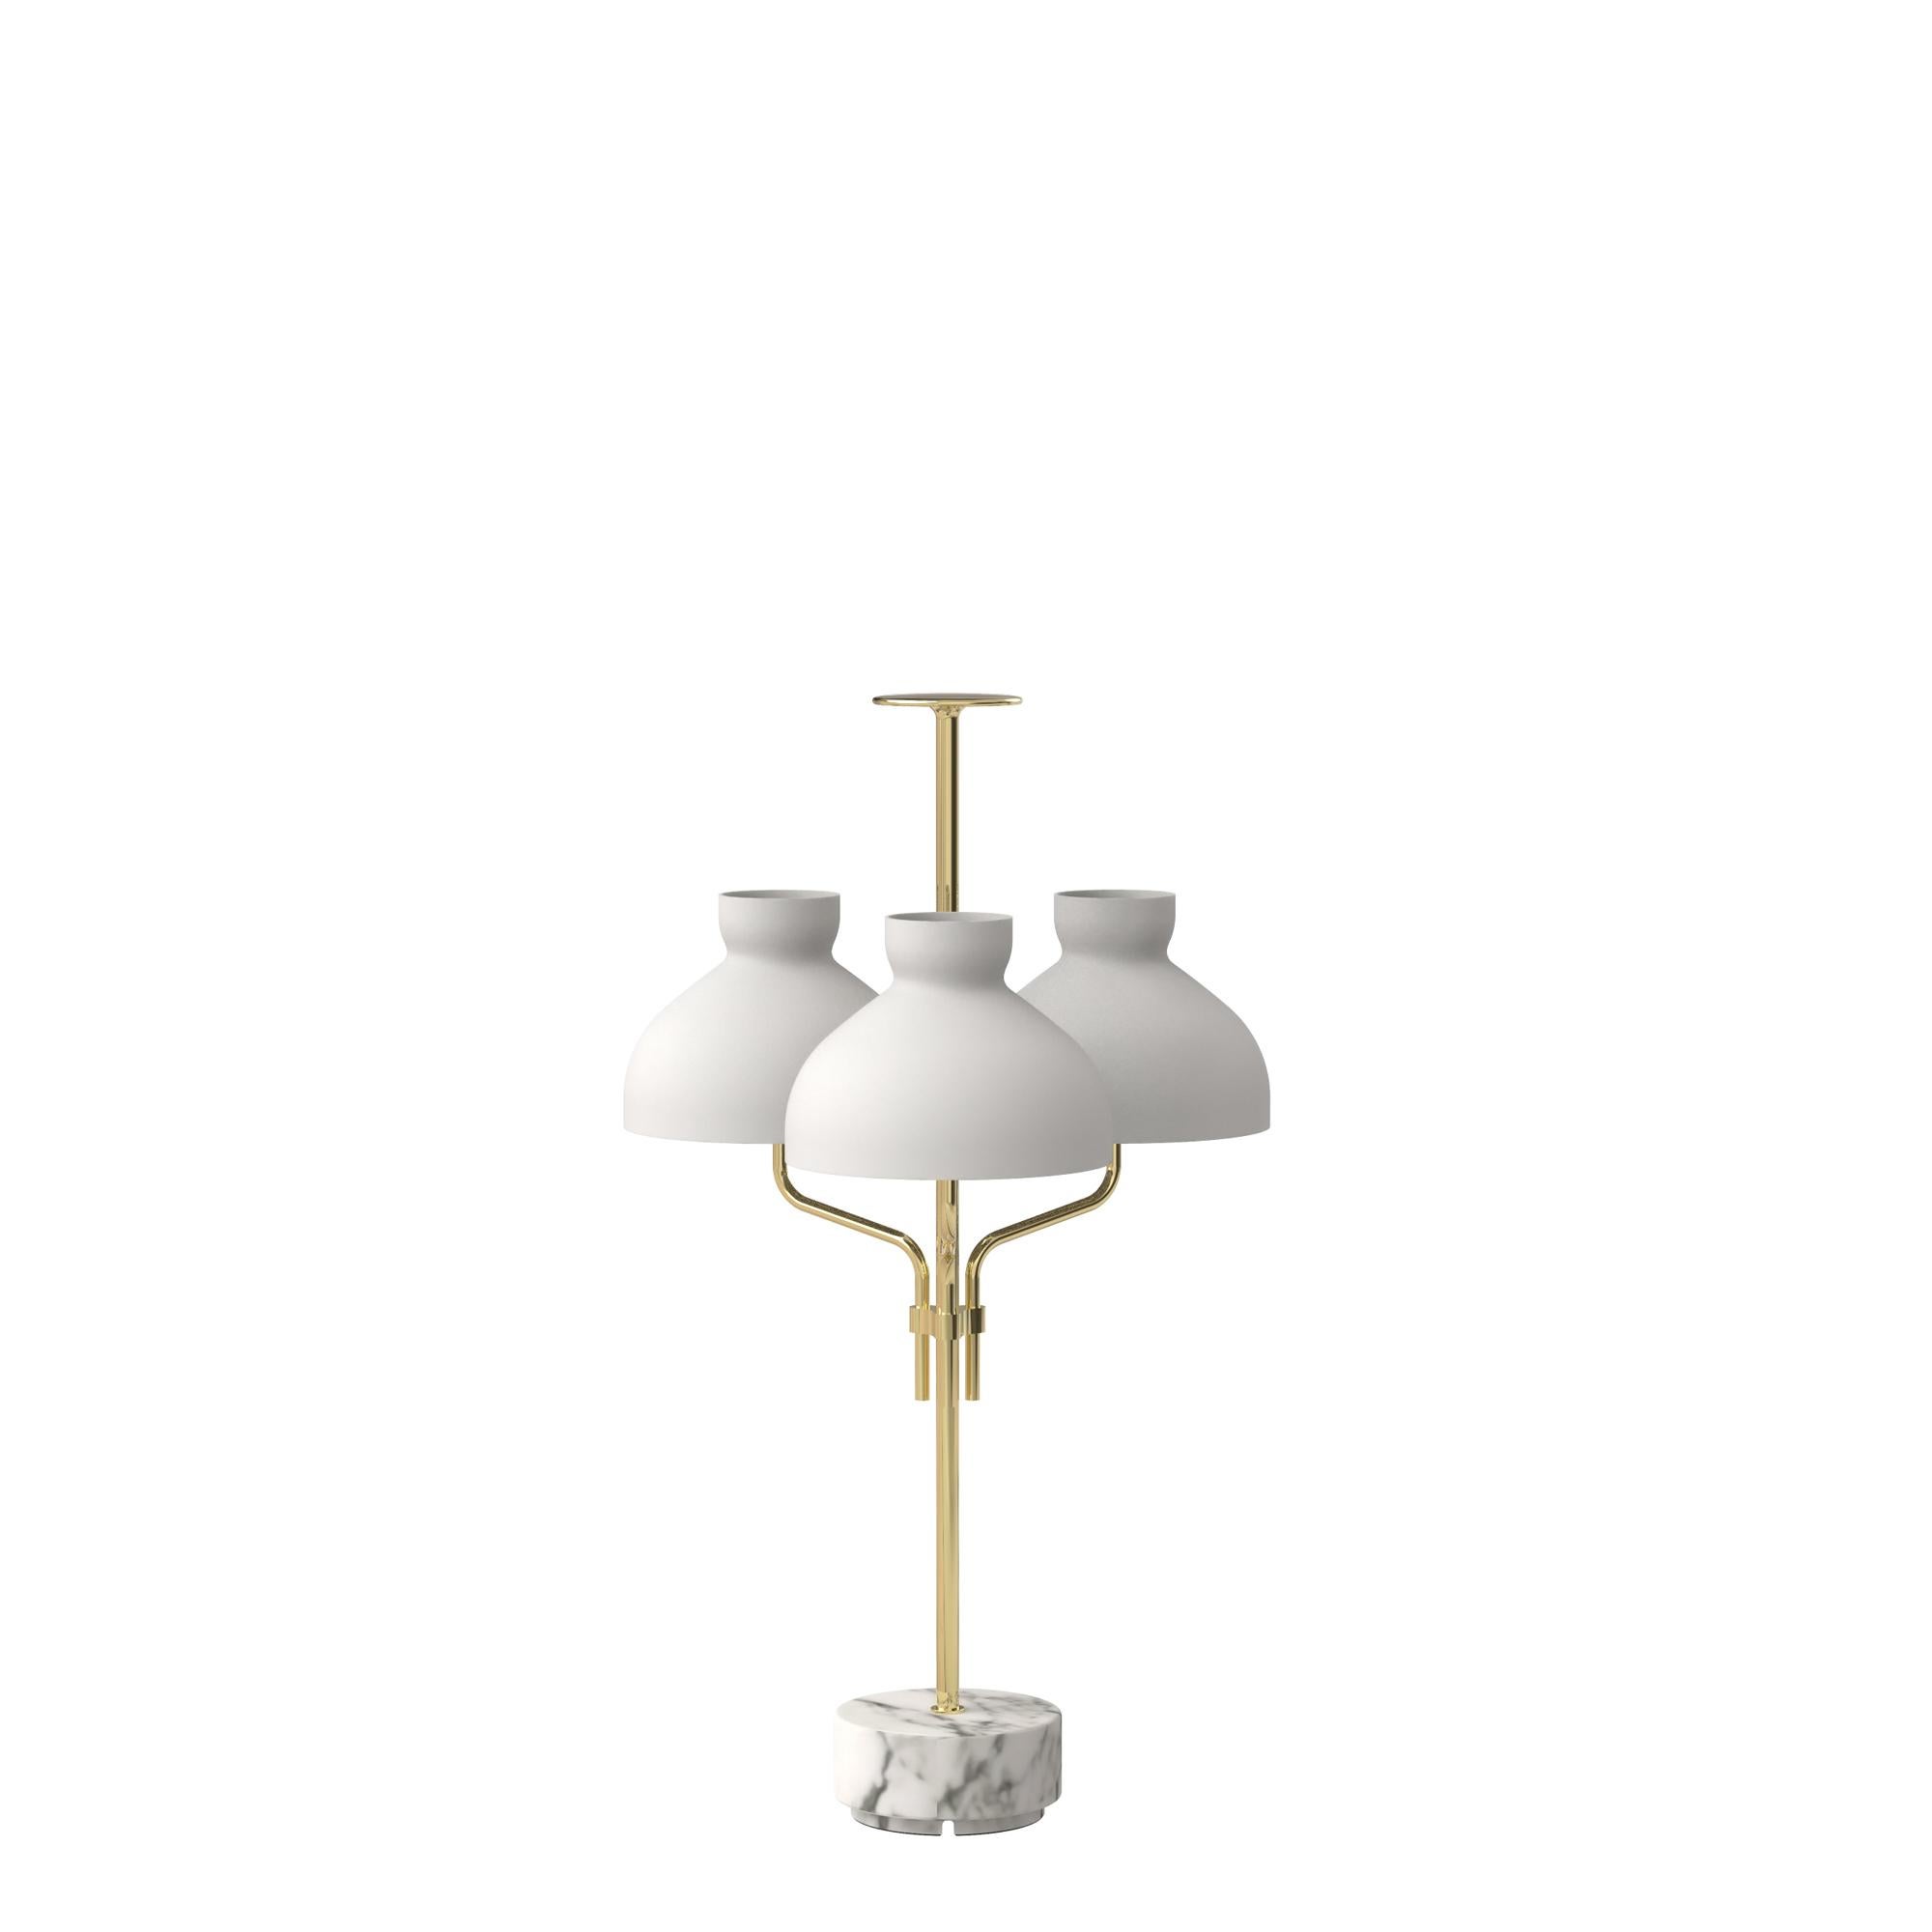 Ignazio Gardella 'Arenzano Tre Fiamme' Table Lamp in White Marble and Brass In New Condition For Sale In Glendale, CA